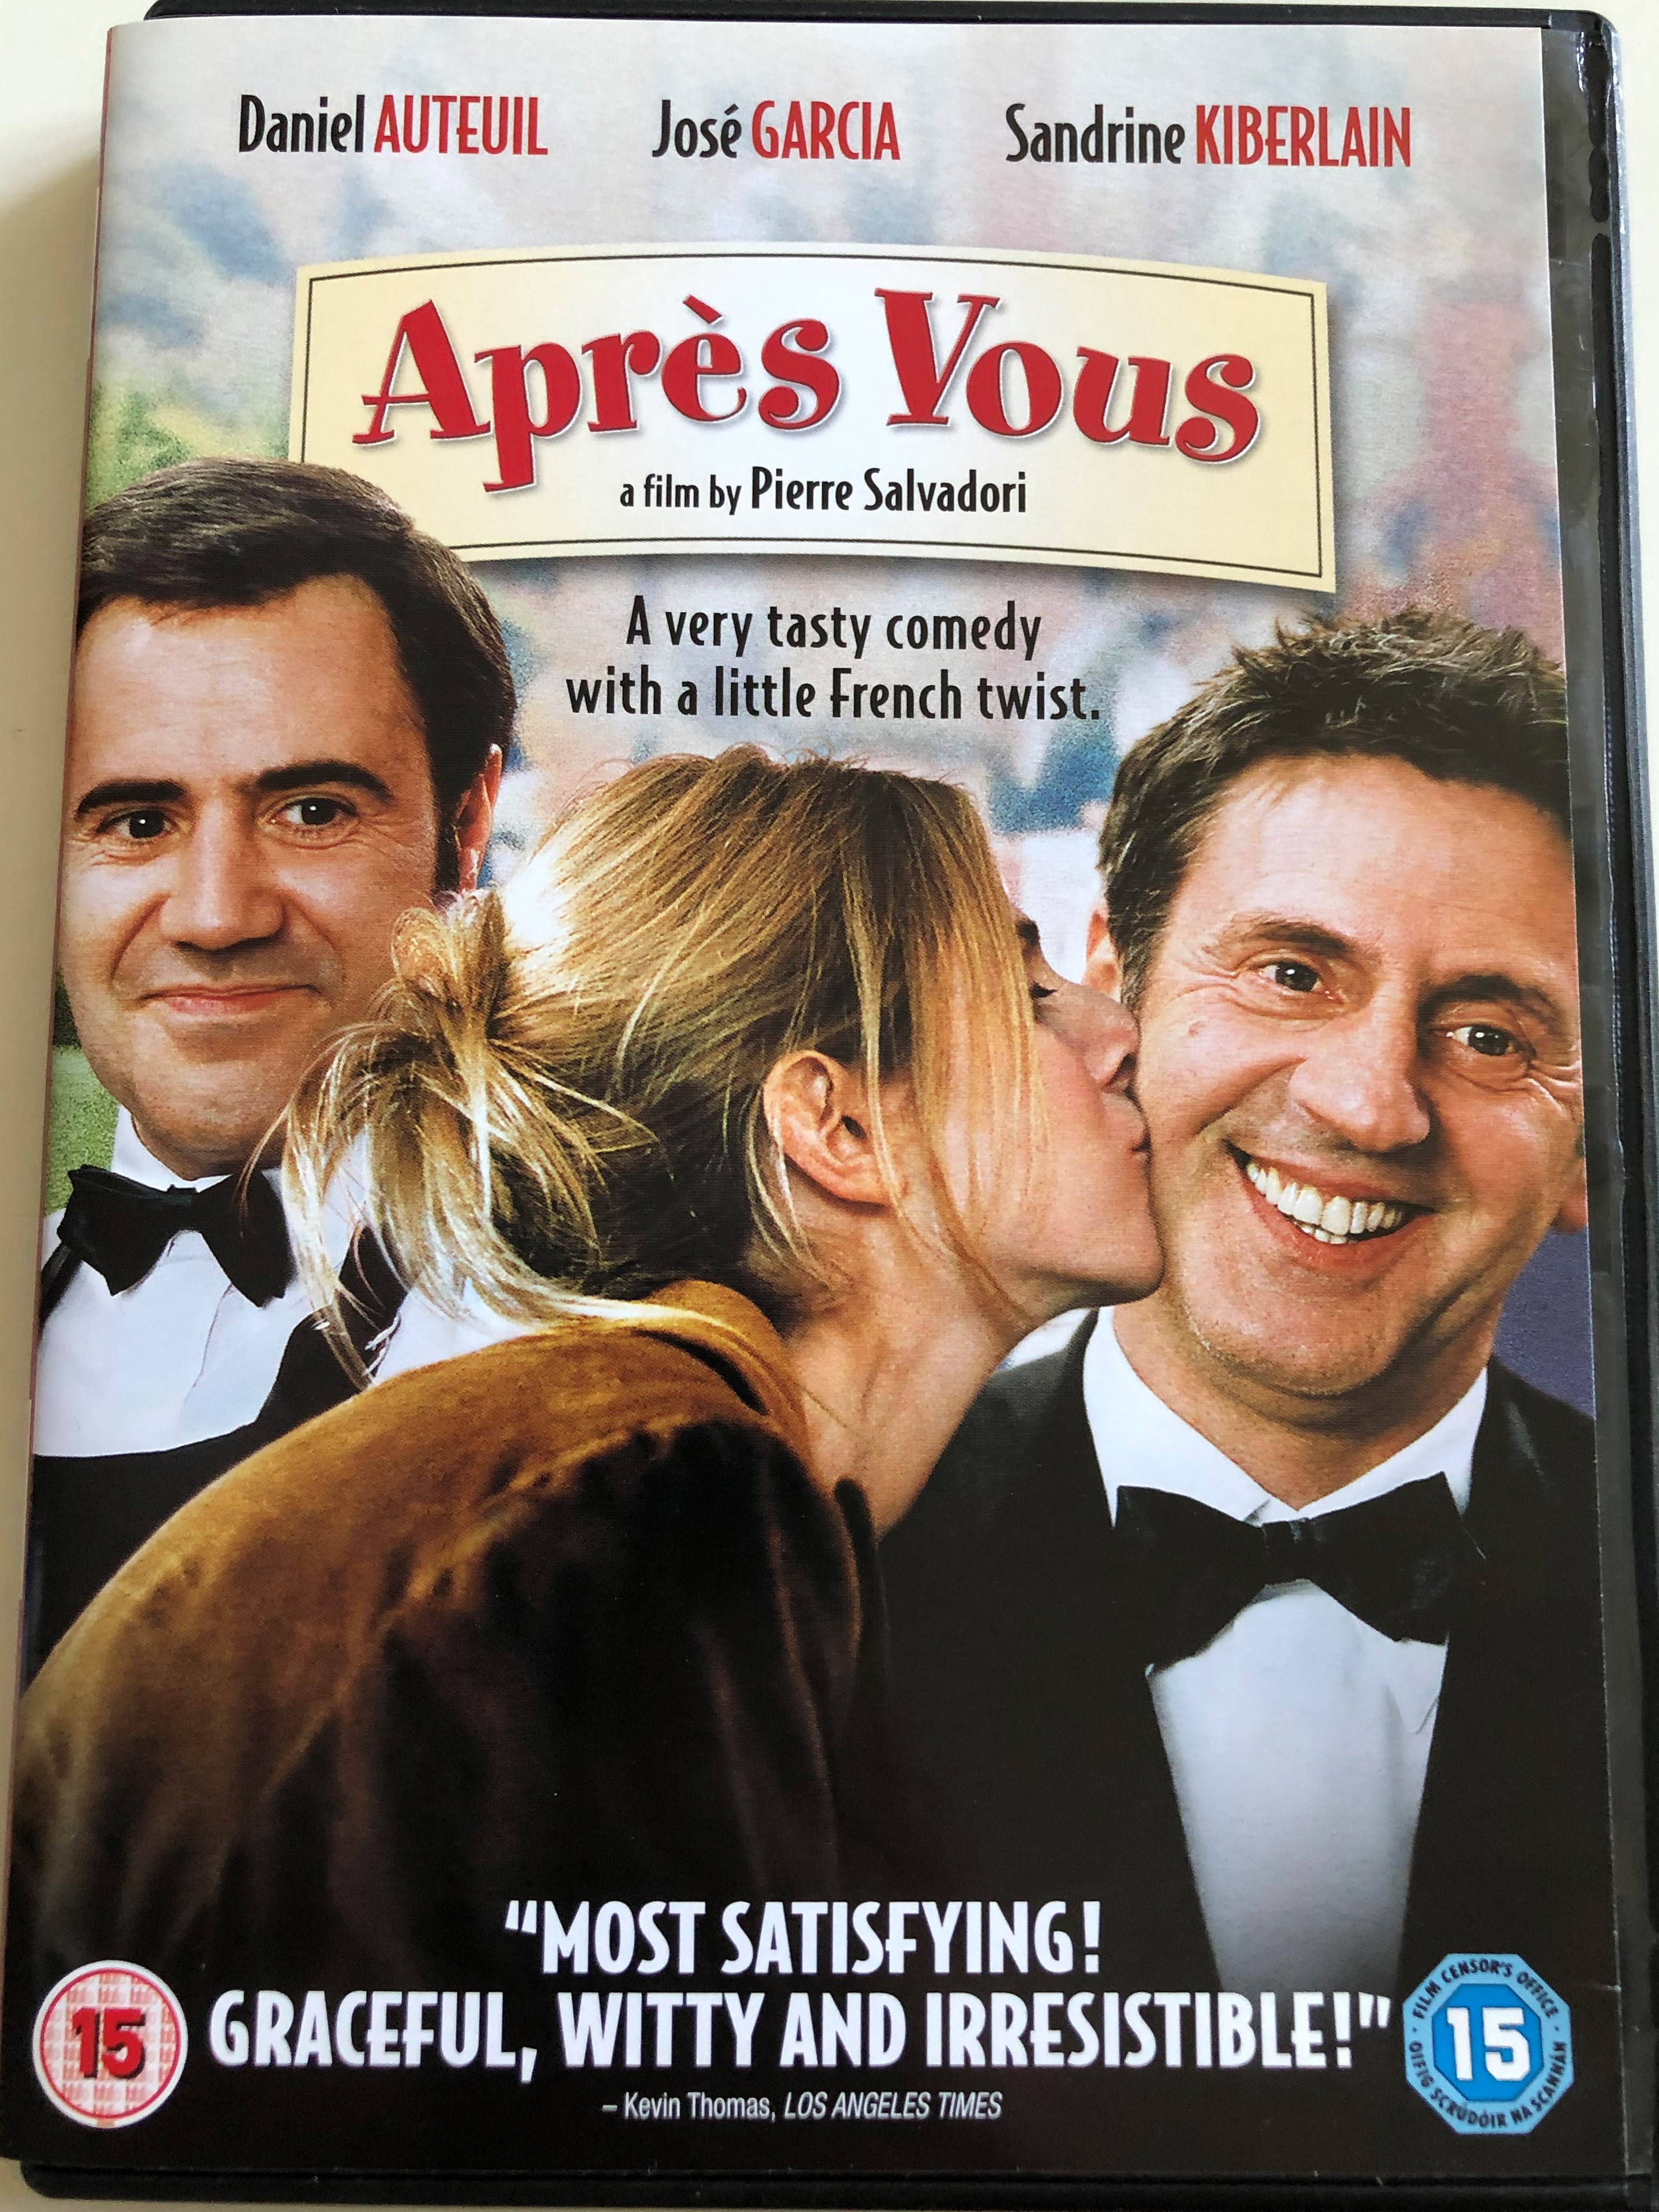 apr-s-vous-dvd-2003-after-you...-directed-by-pierre-salvadori-starring-daniel-auteuil-jos-garcia-sandrine-kiberlain-1-.jpg